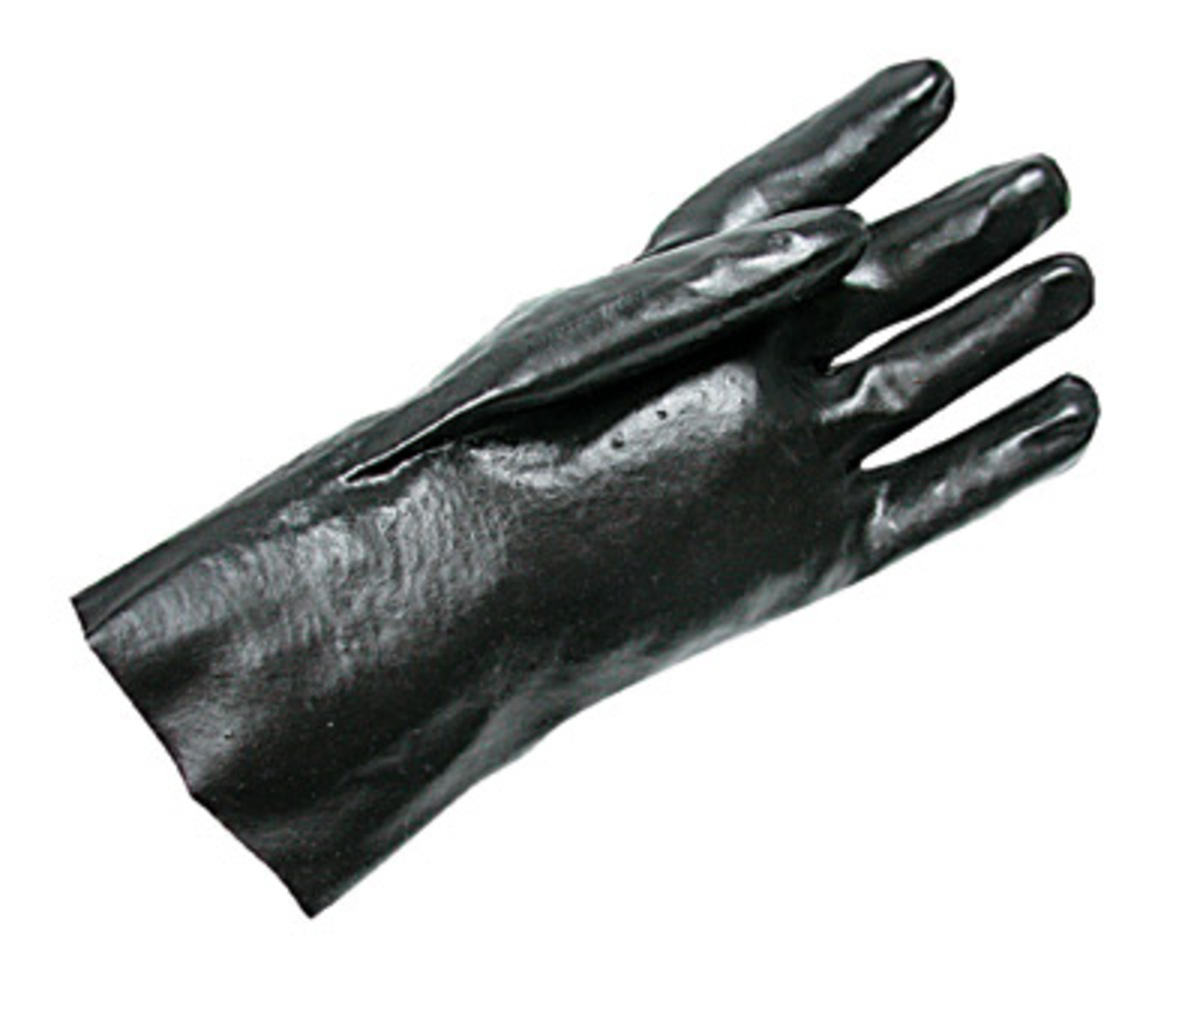 RADNOR® Large Black PVC Chemical Resistant Gloves